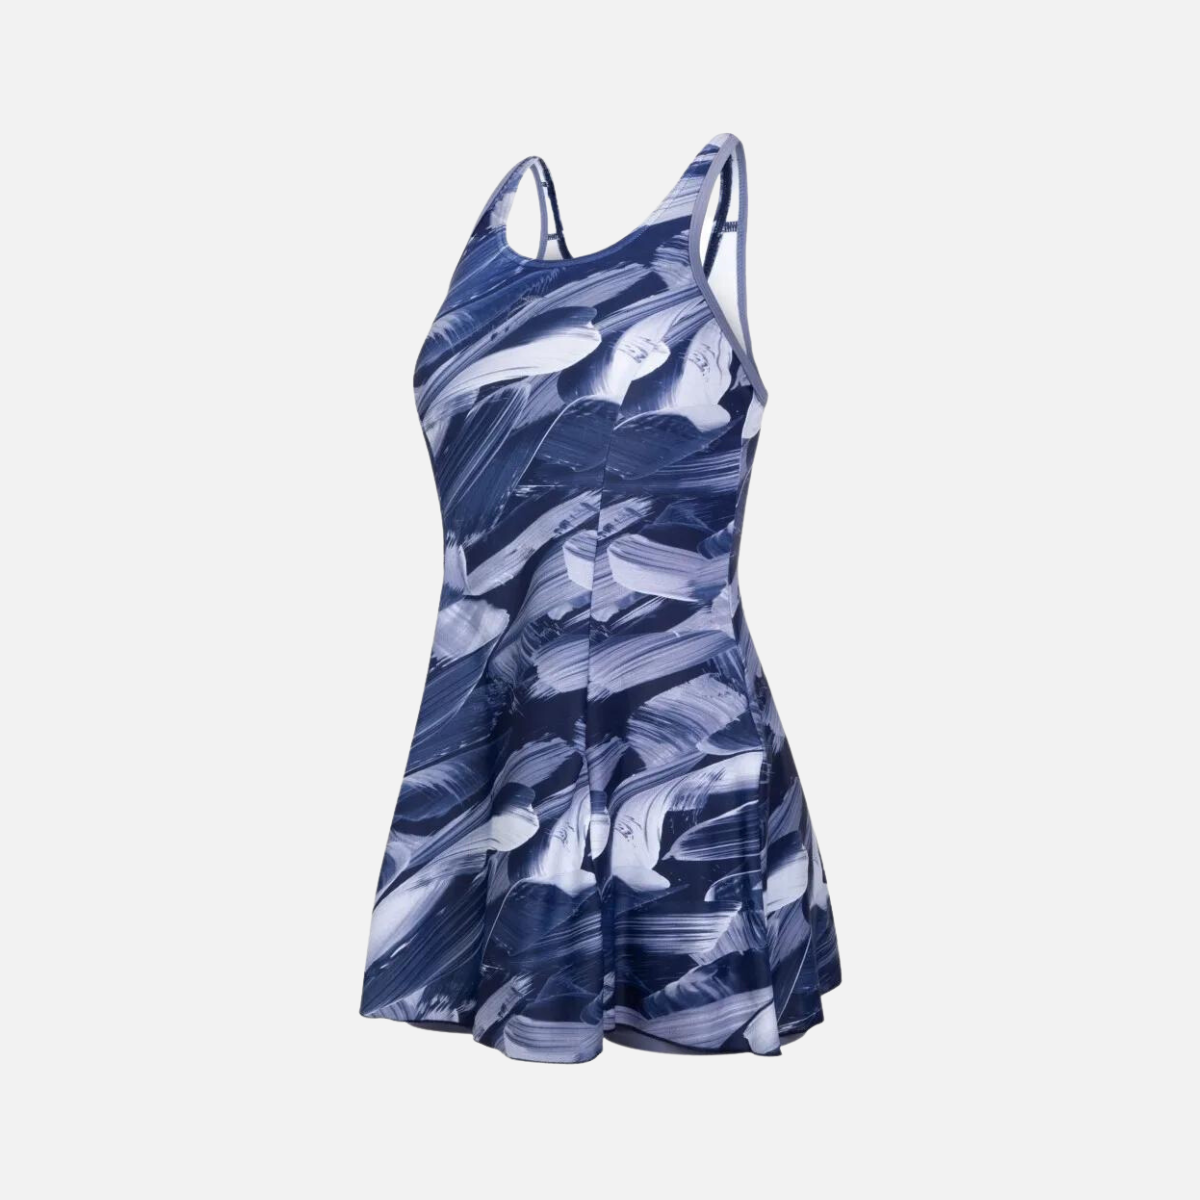 Speedo Allover Print Racerback Women's Swimdress - Navy/Vita Grey/White